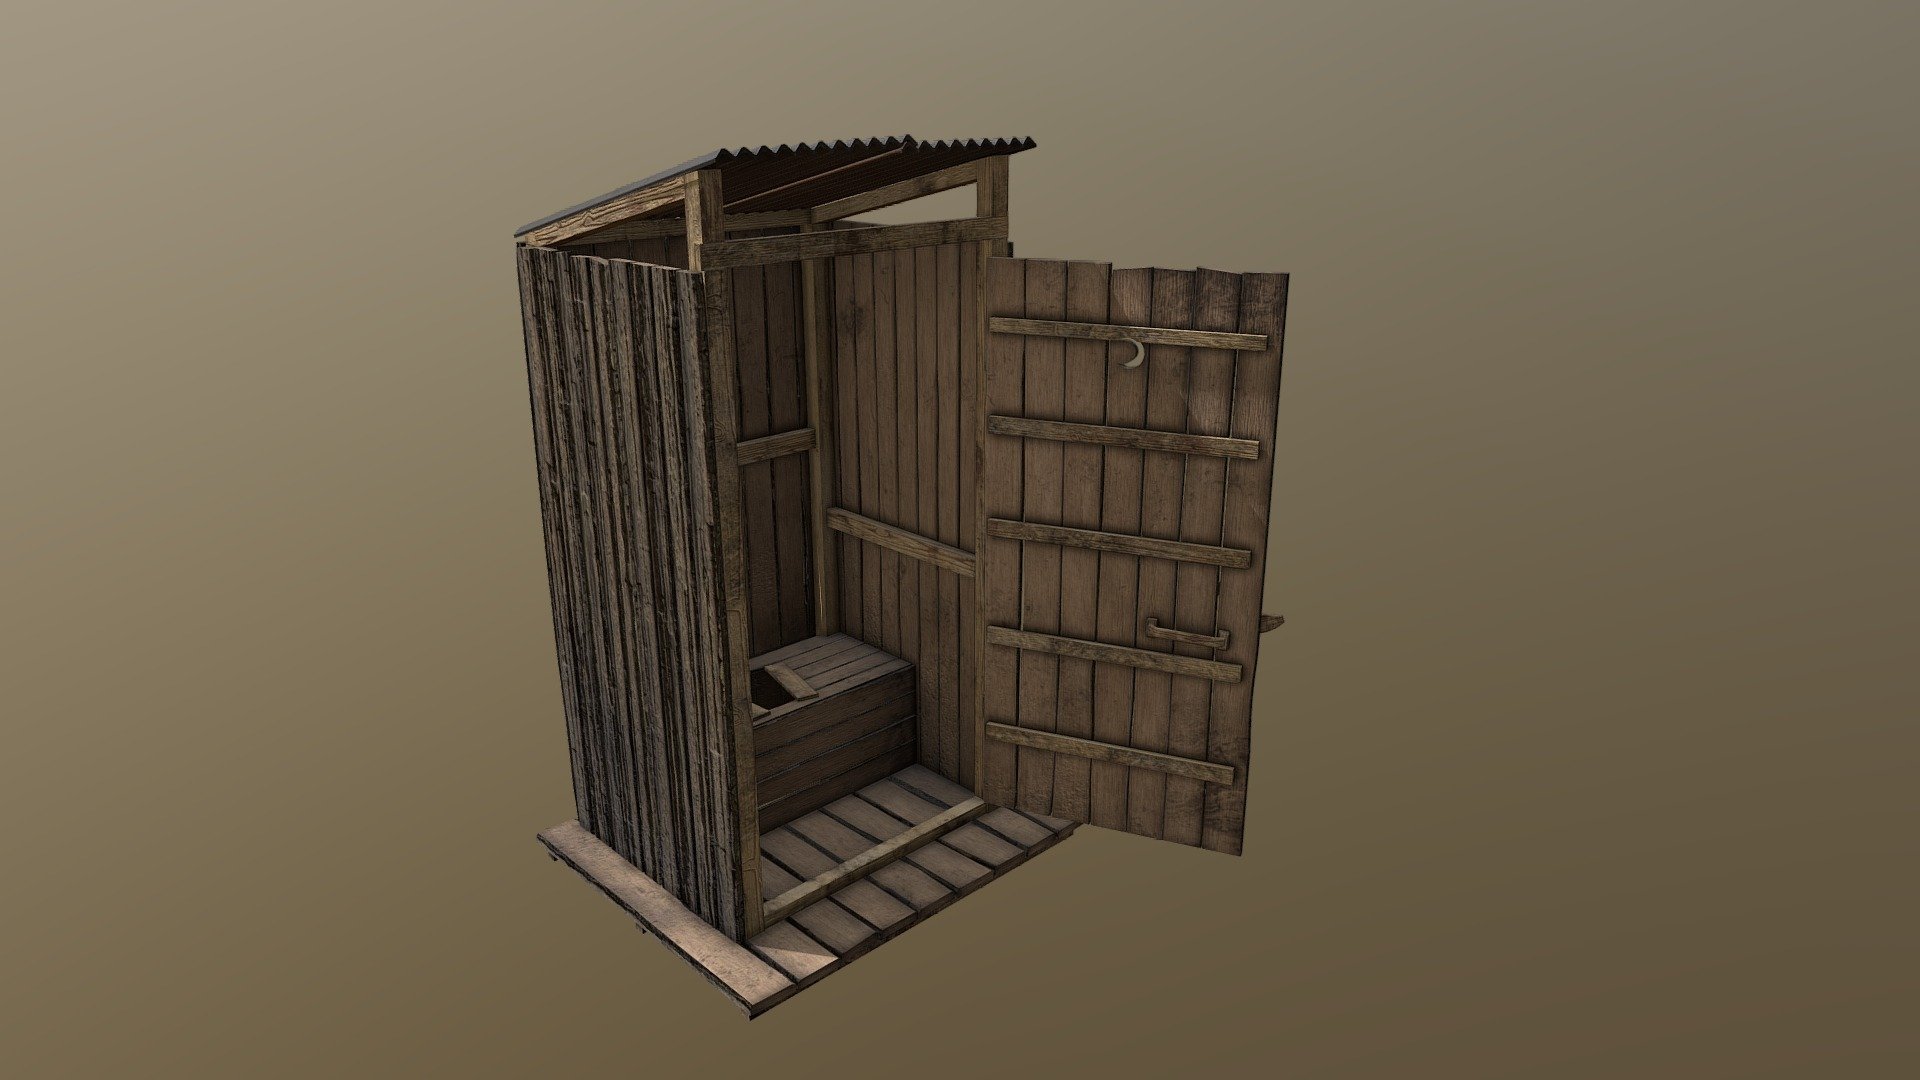 11k: tris
6 materials: 2k
average texel density: 8+-

https://www.artstation.com/artwork/ZevE4X - Outhouse/toilet - 3D model by lilnoisYmeercat 3d model